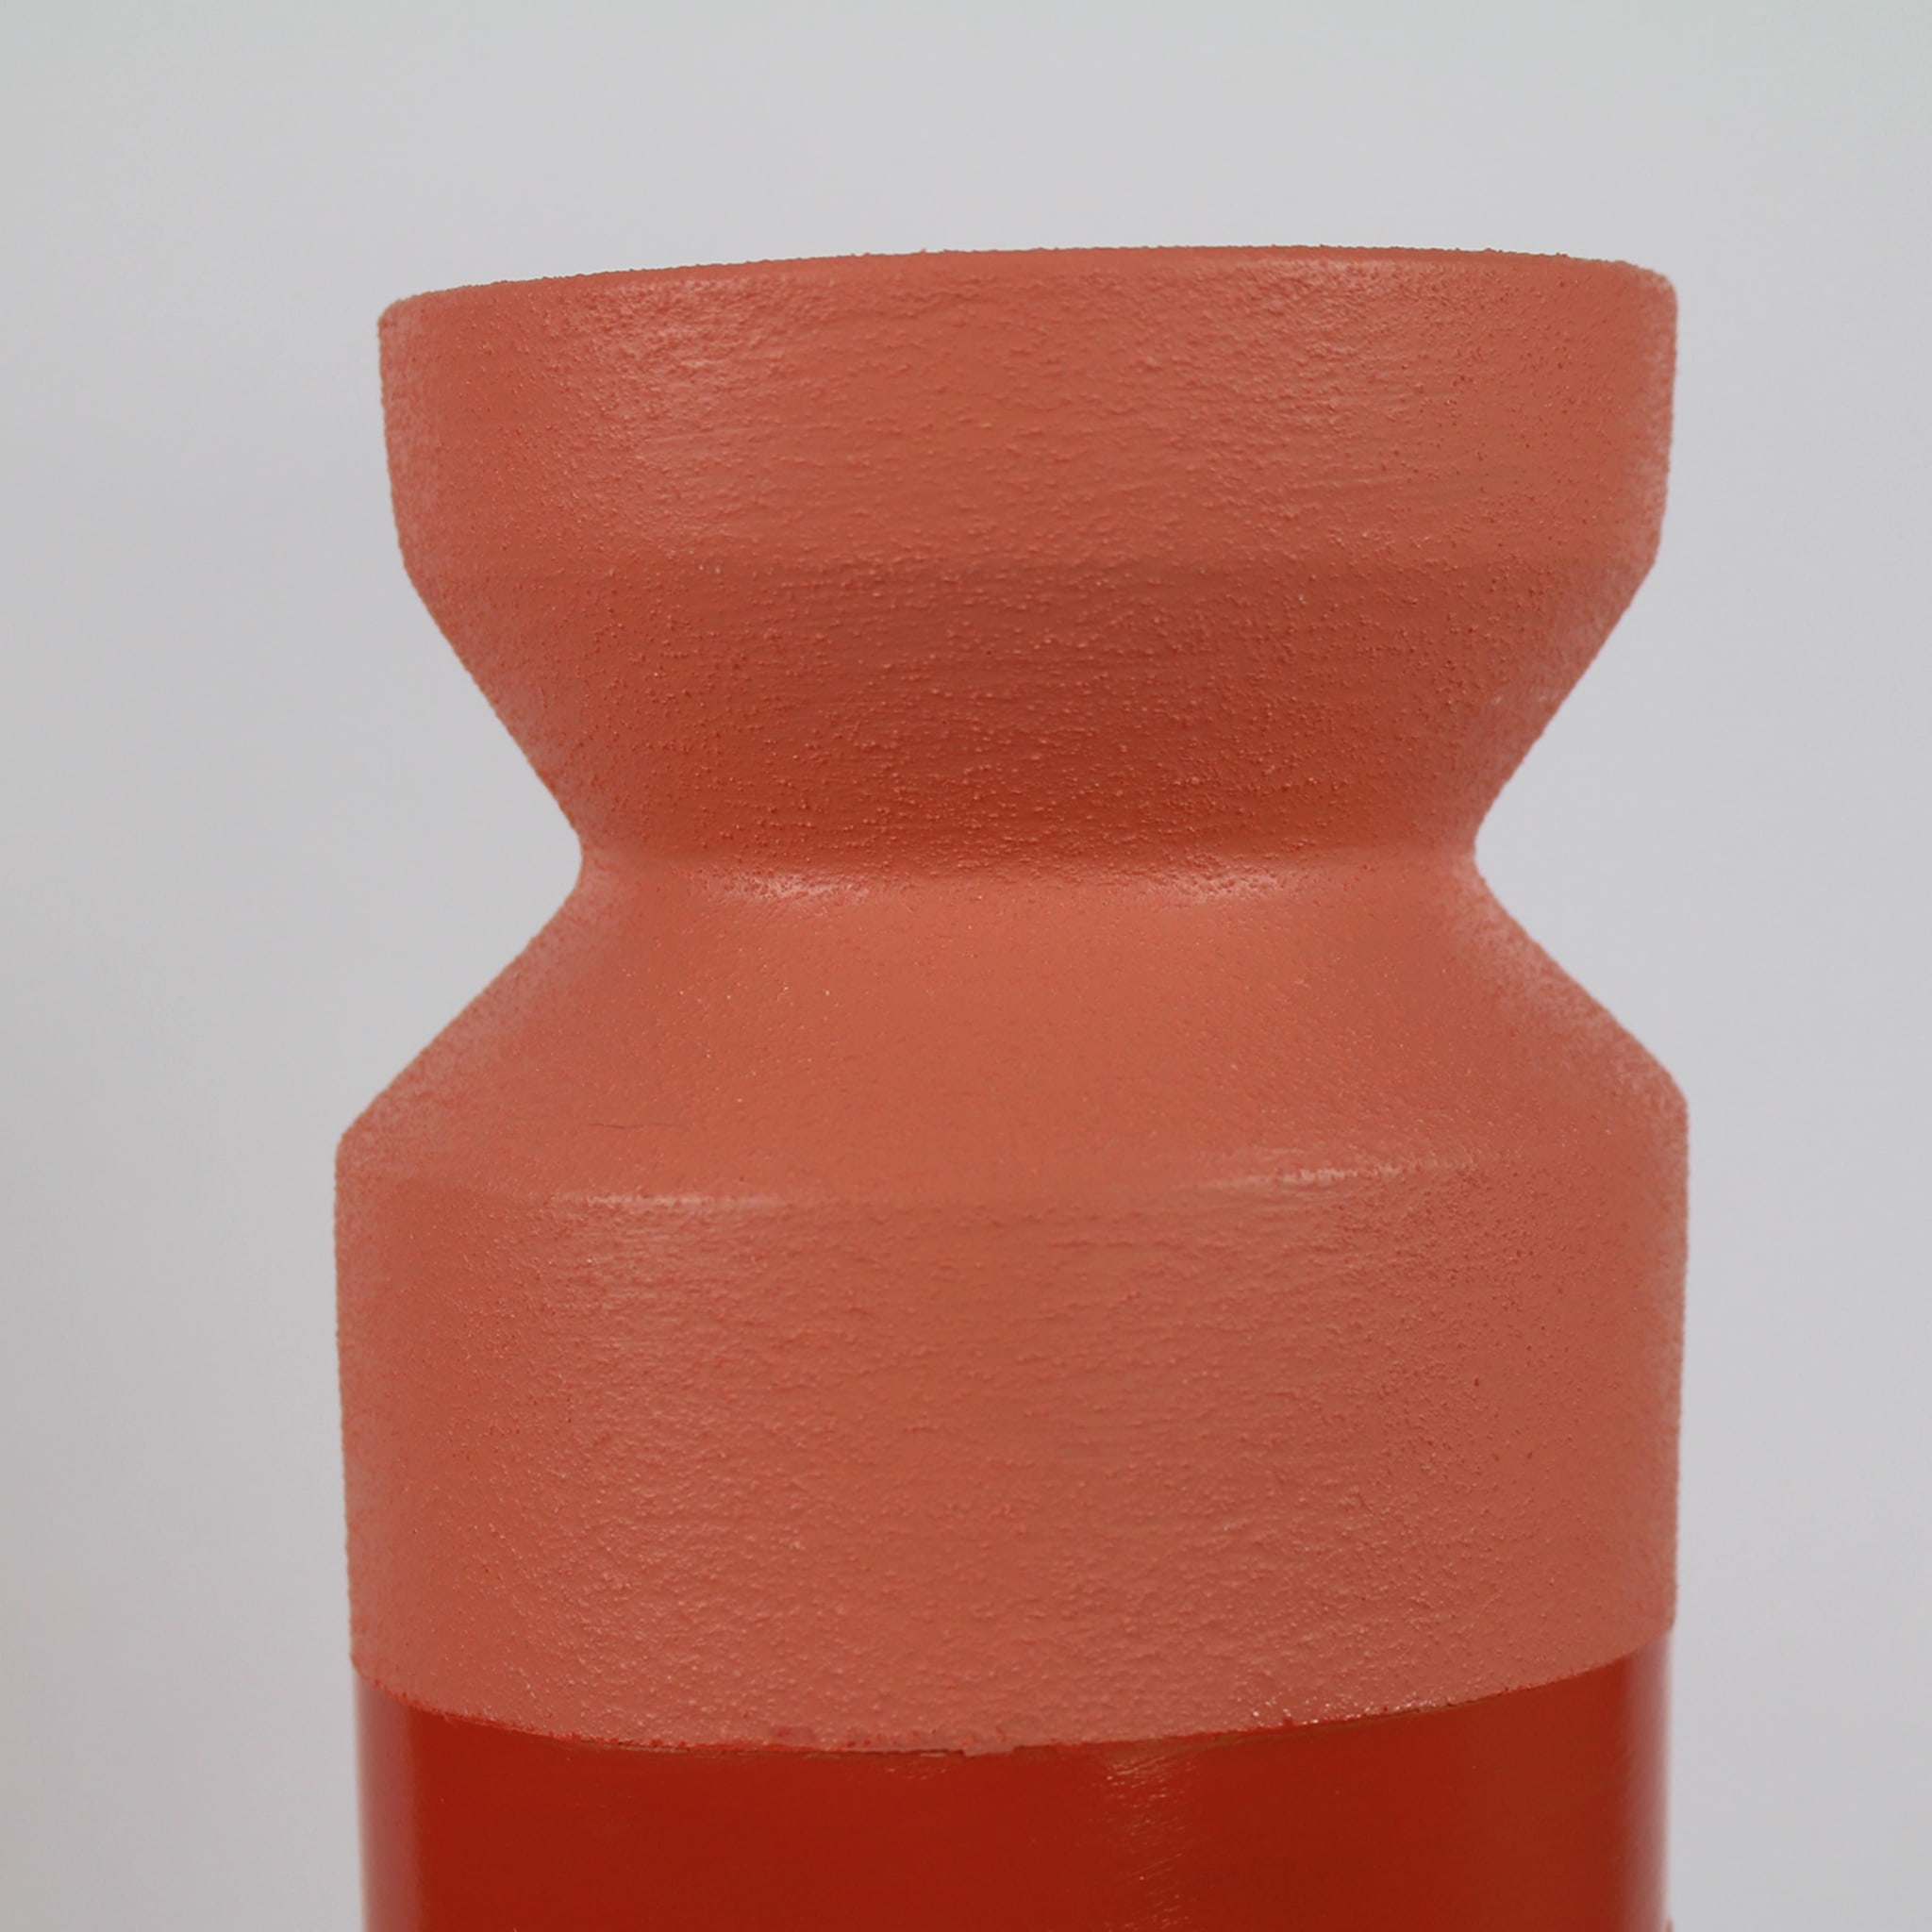 Linear Red & Orange Vase 14 by Mascia Meccani - Alternative view 4